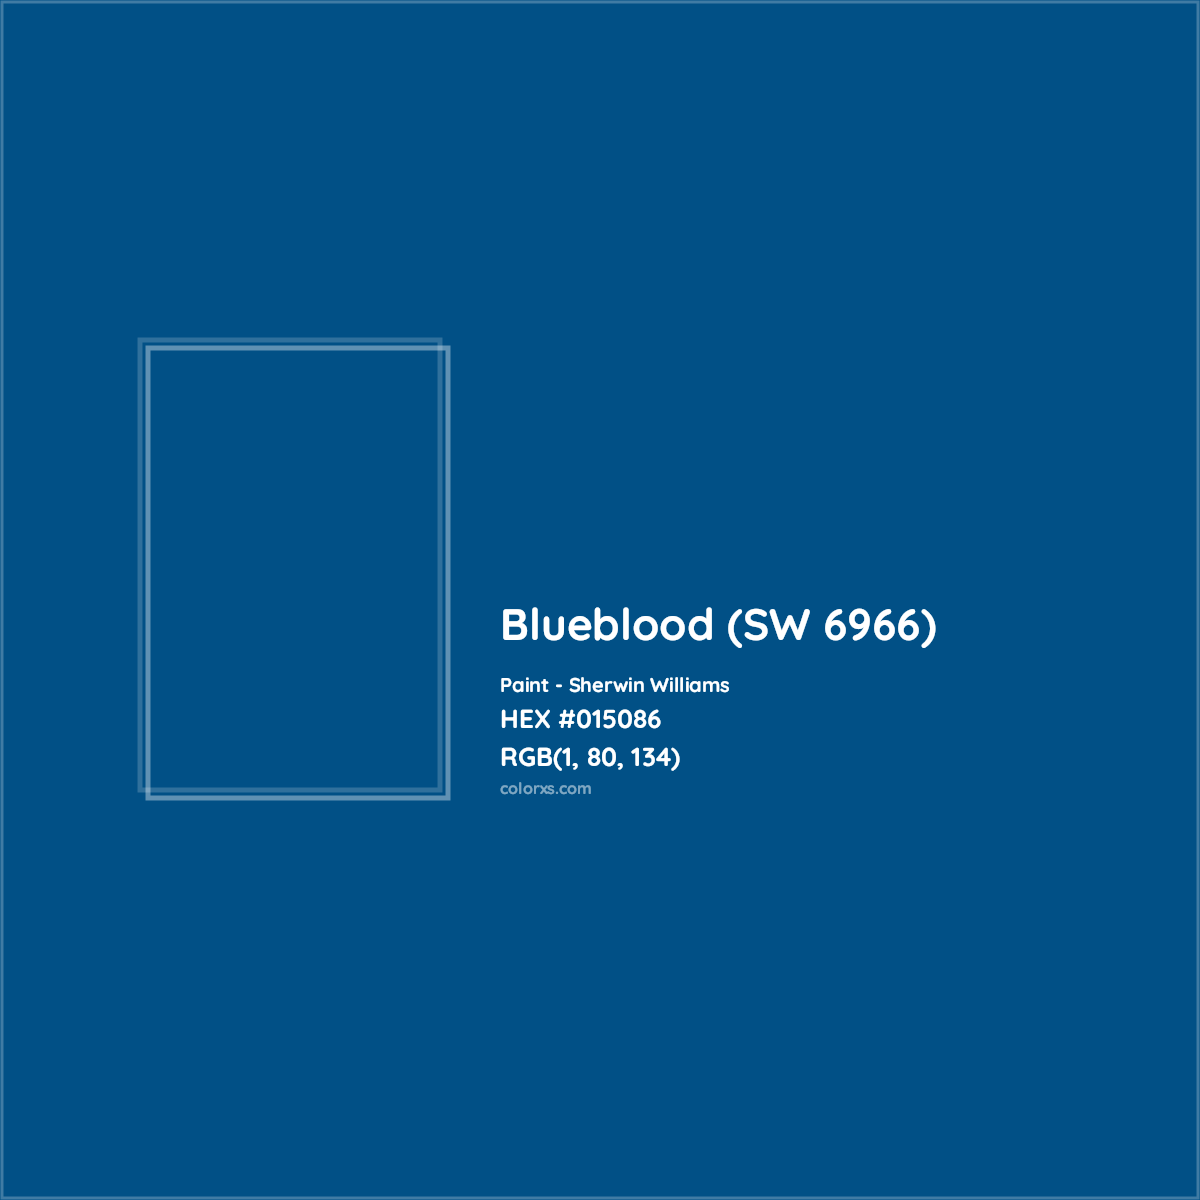 HEX #015086 Blueblood (SW 6966) Paint Sherwin Williams - Color Code